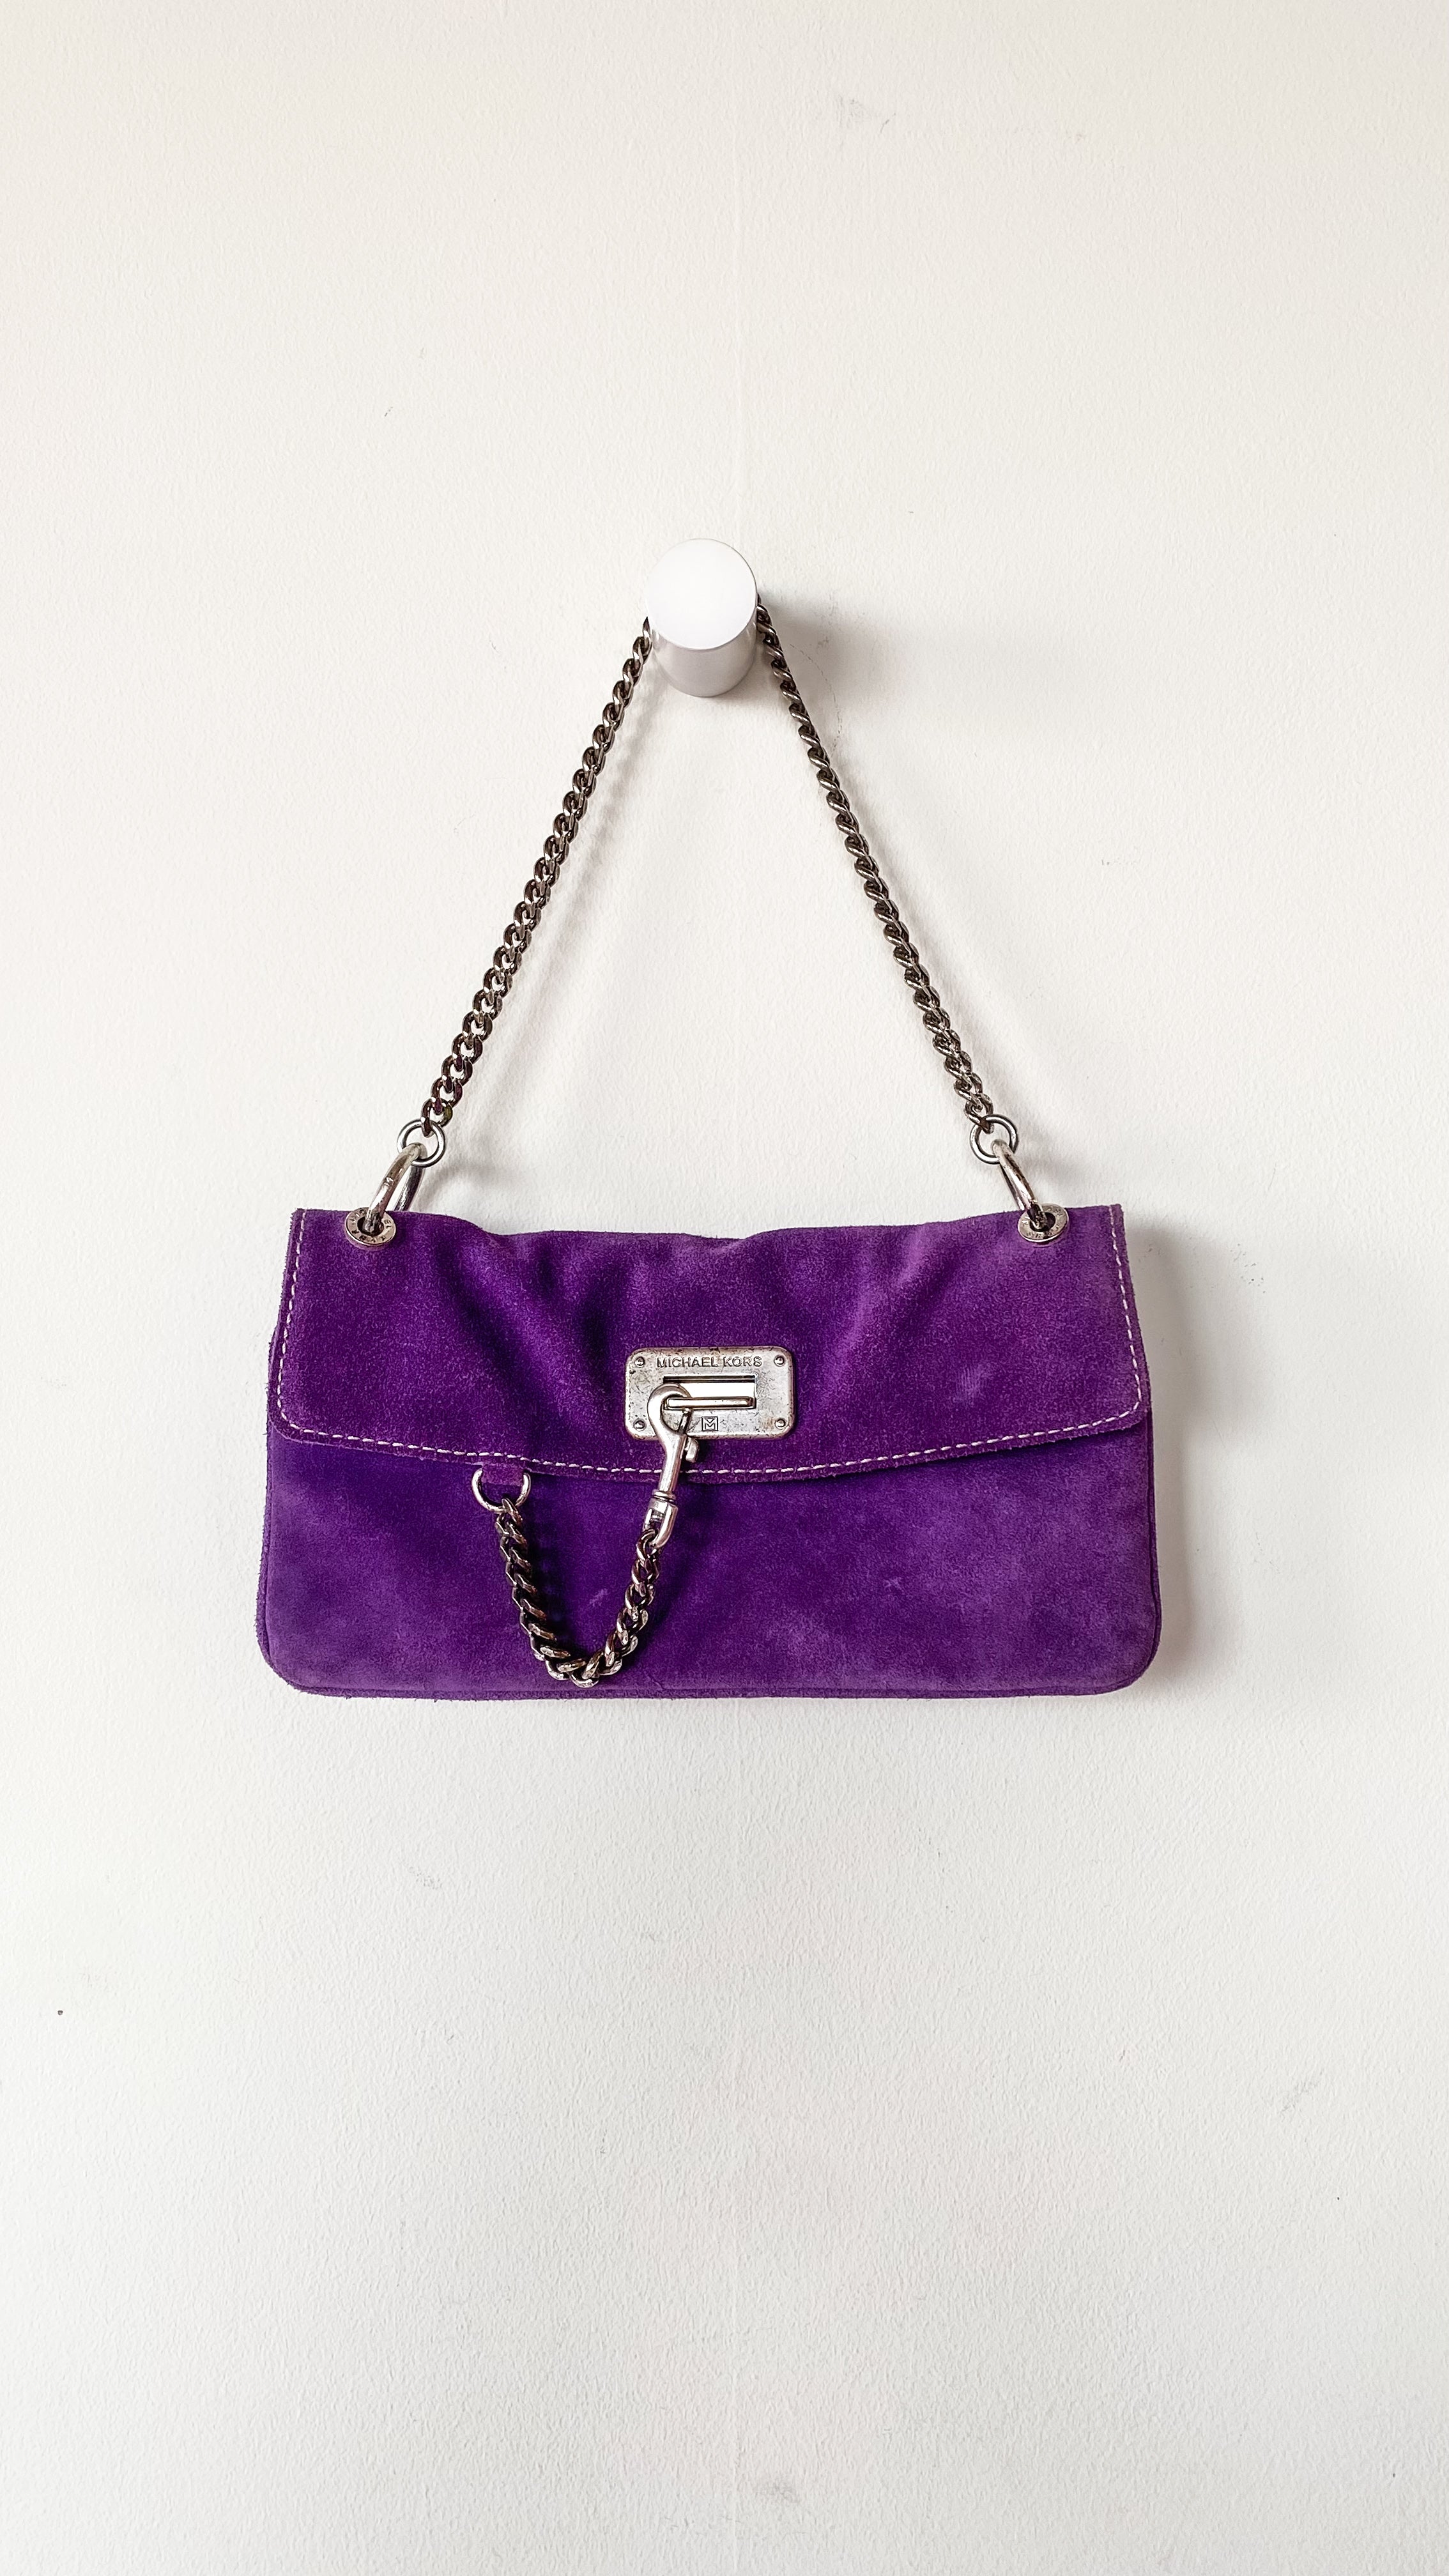 Michael Kors Handbags in Michael Kors | Purple - Walmart.com